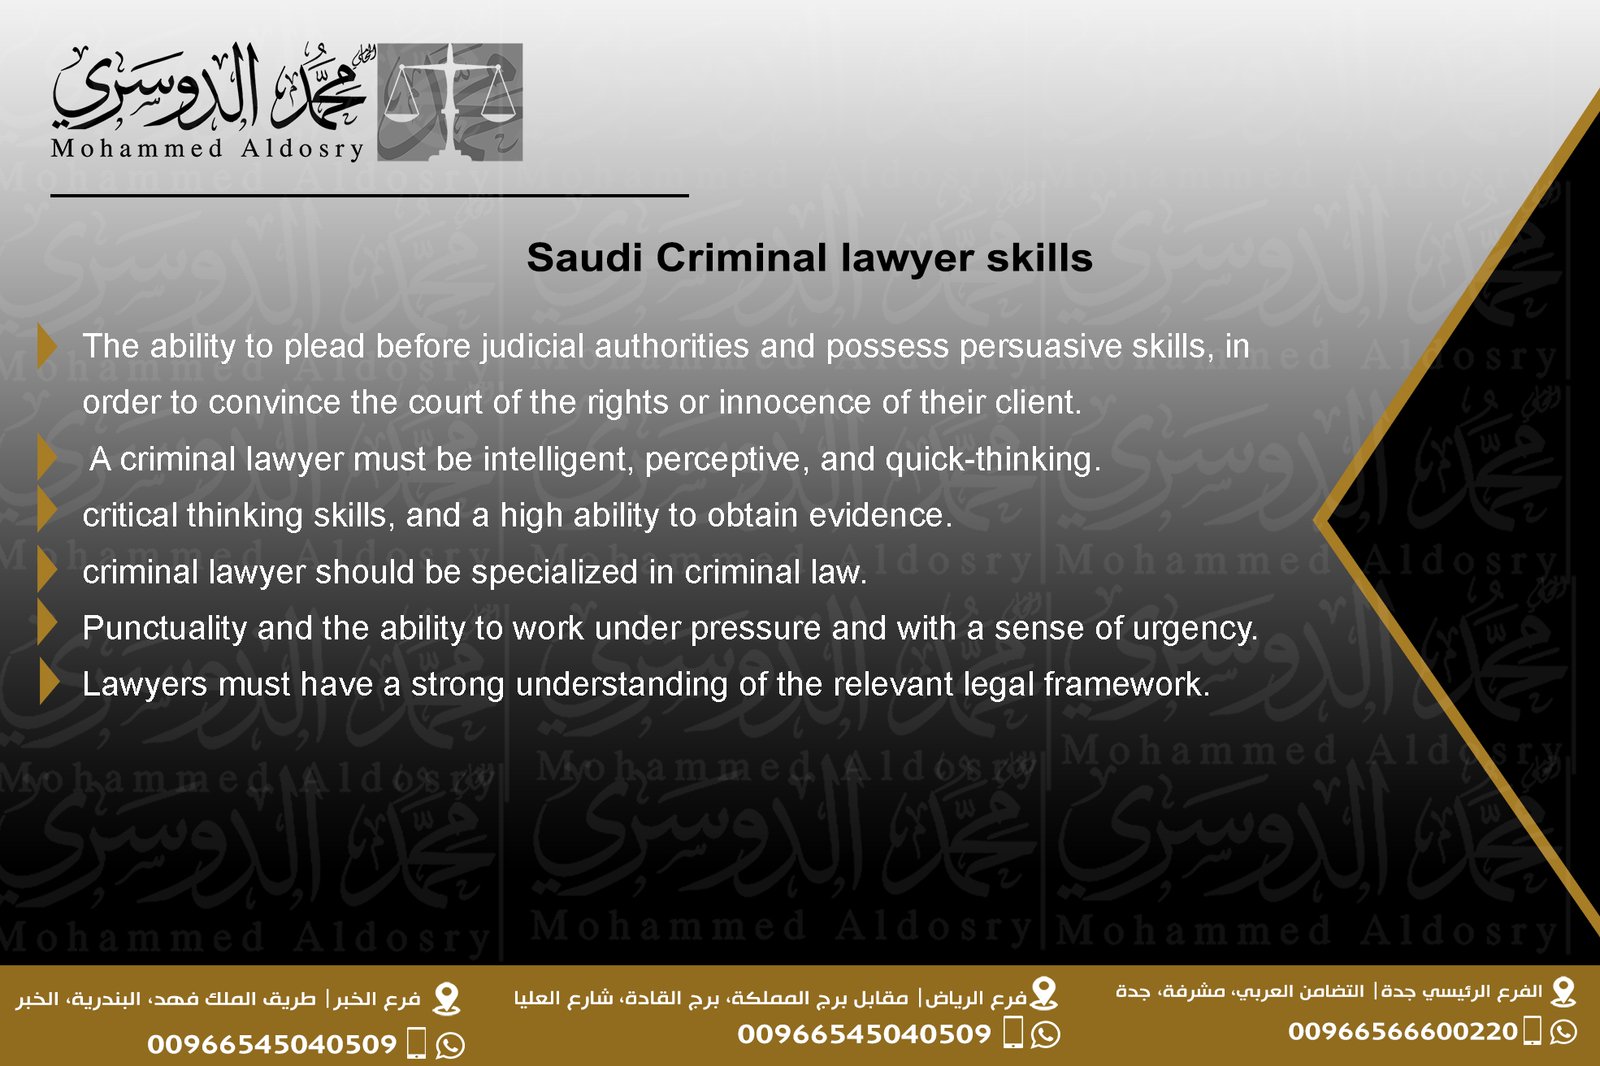 Saudi Criminal lawyer skills